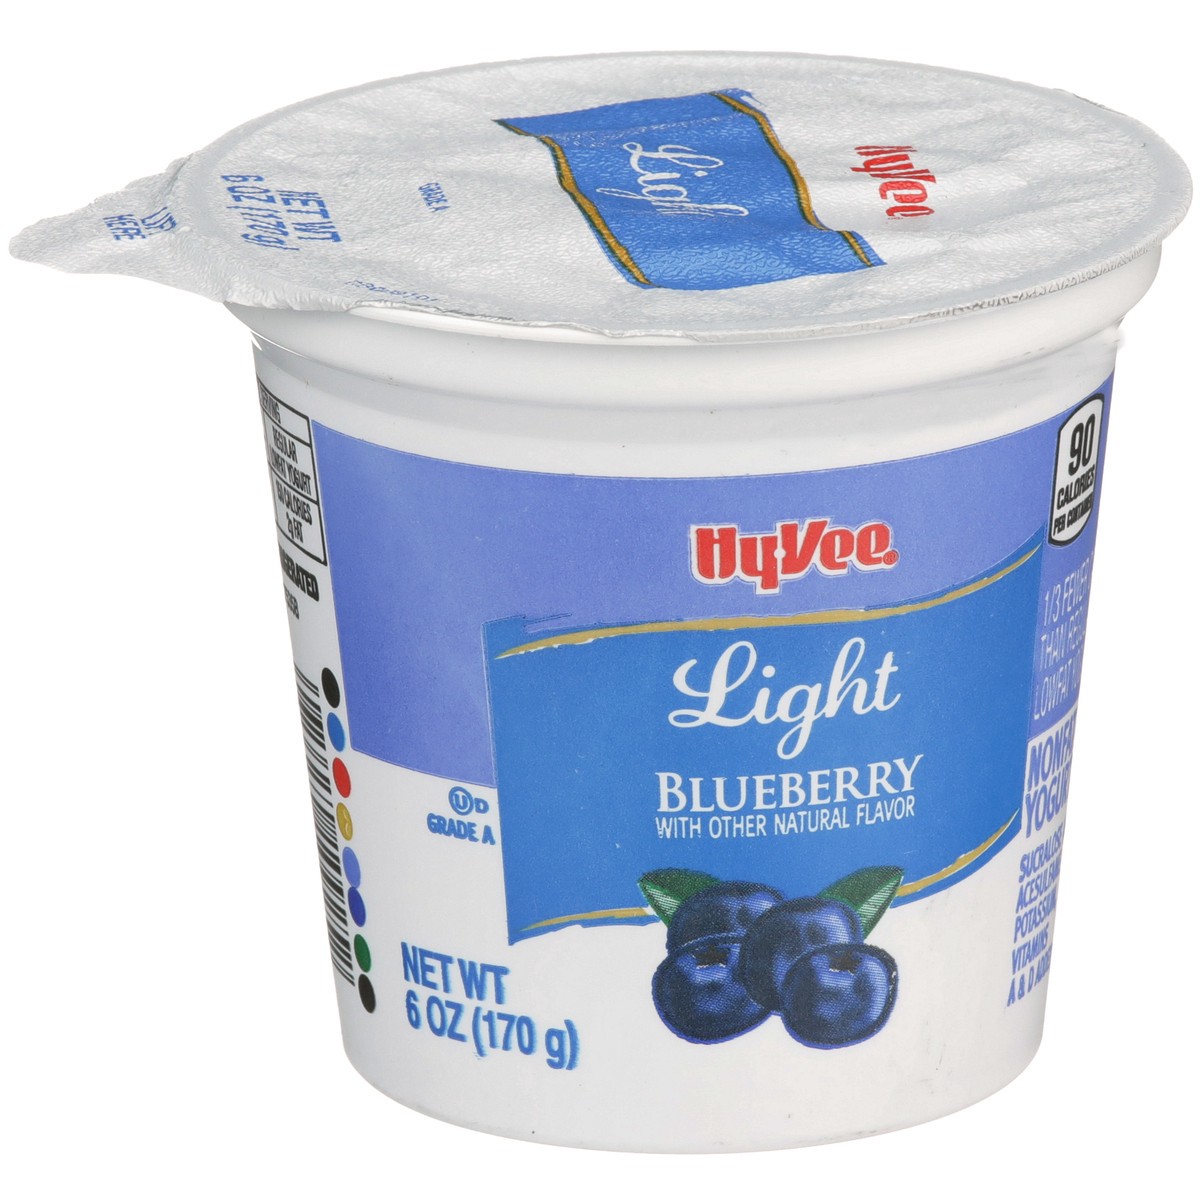 slide 2 of 8, Hy-vee Blueberry Light Nonfat Yogurt, 6 oz